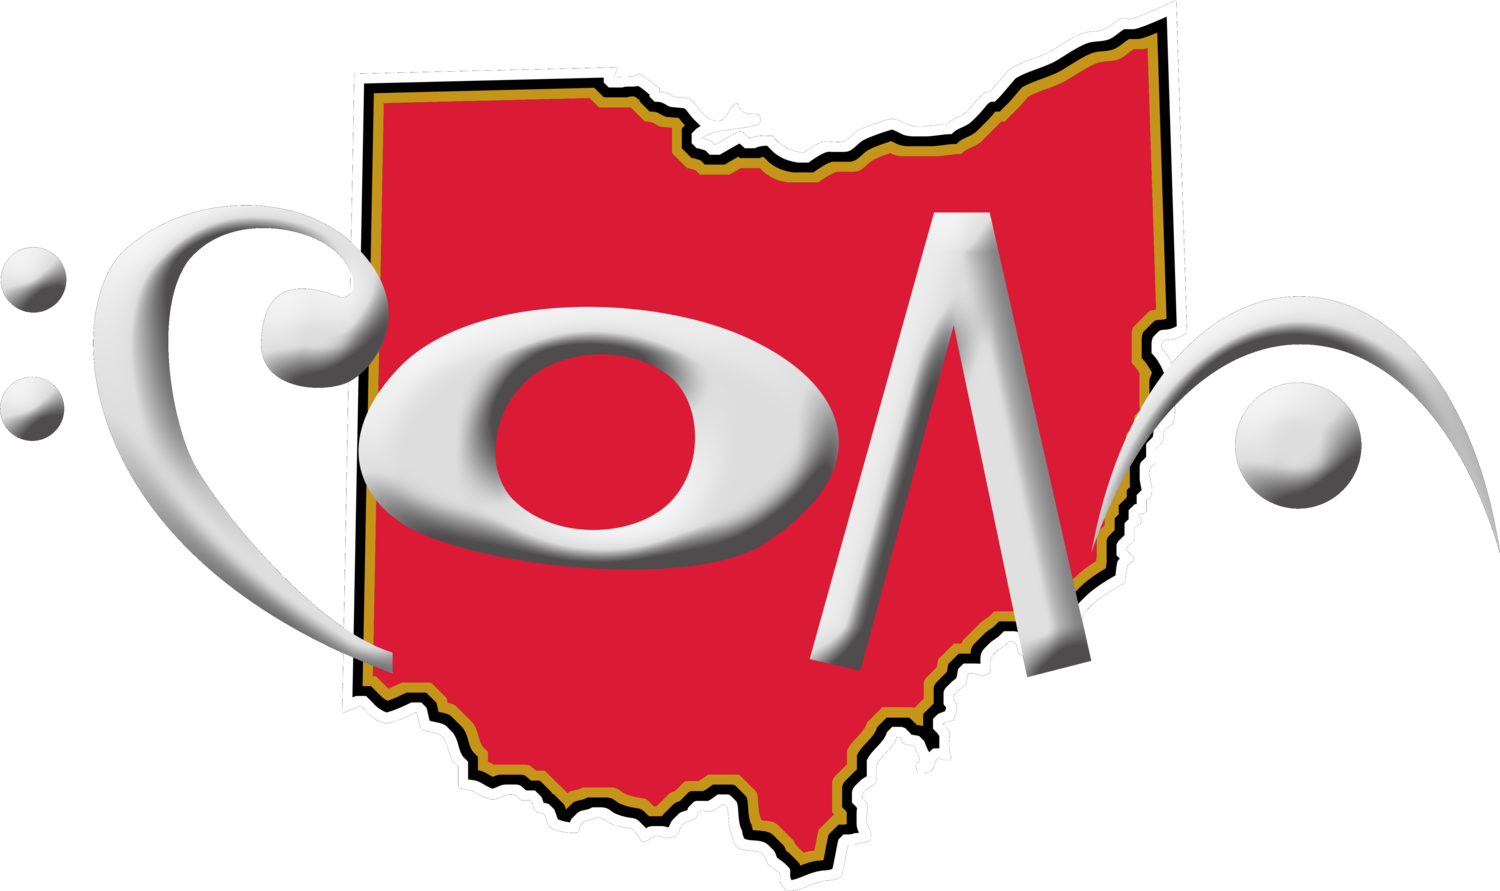 Central Ohio Alumni Association